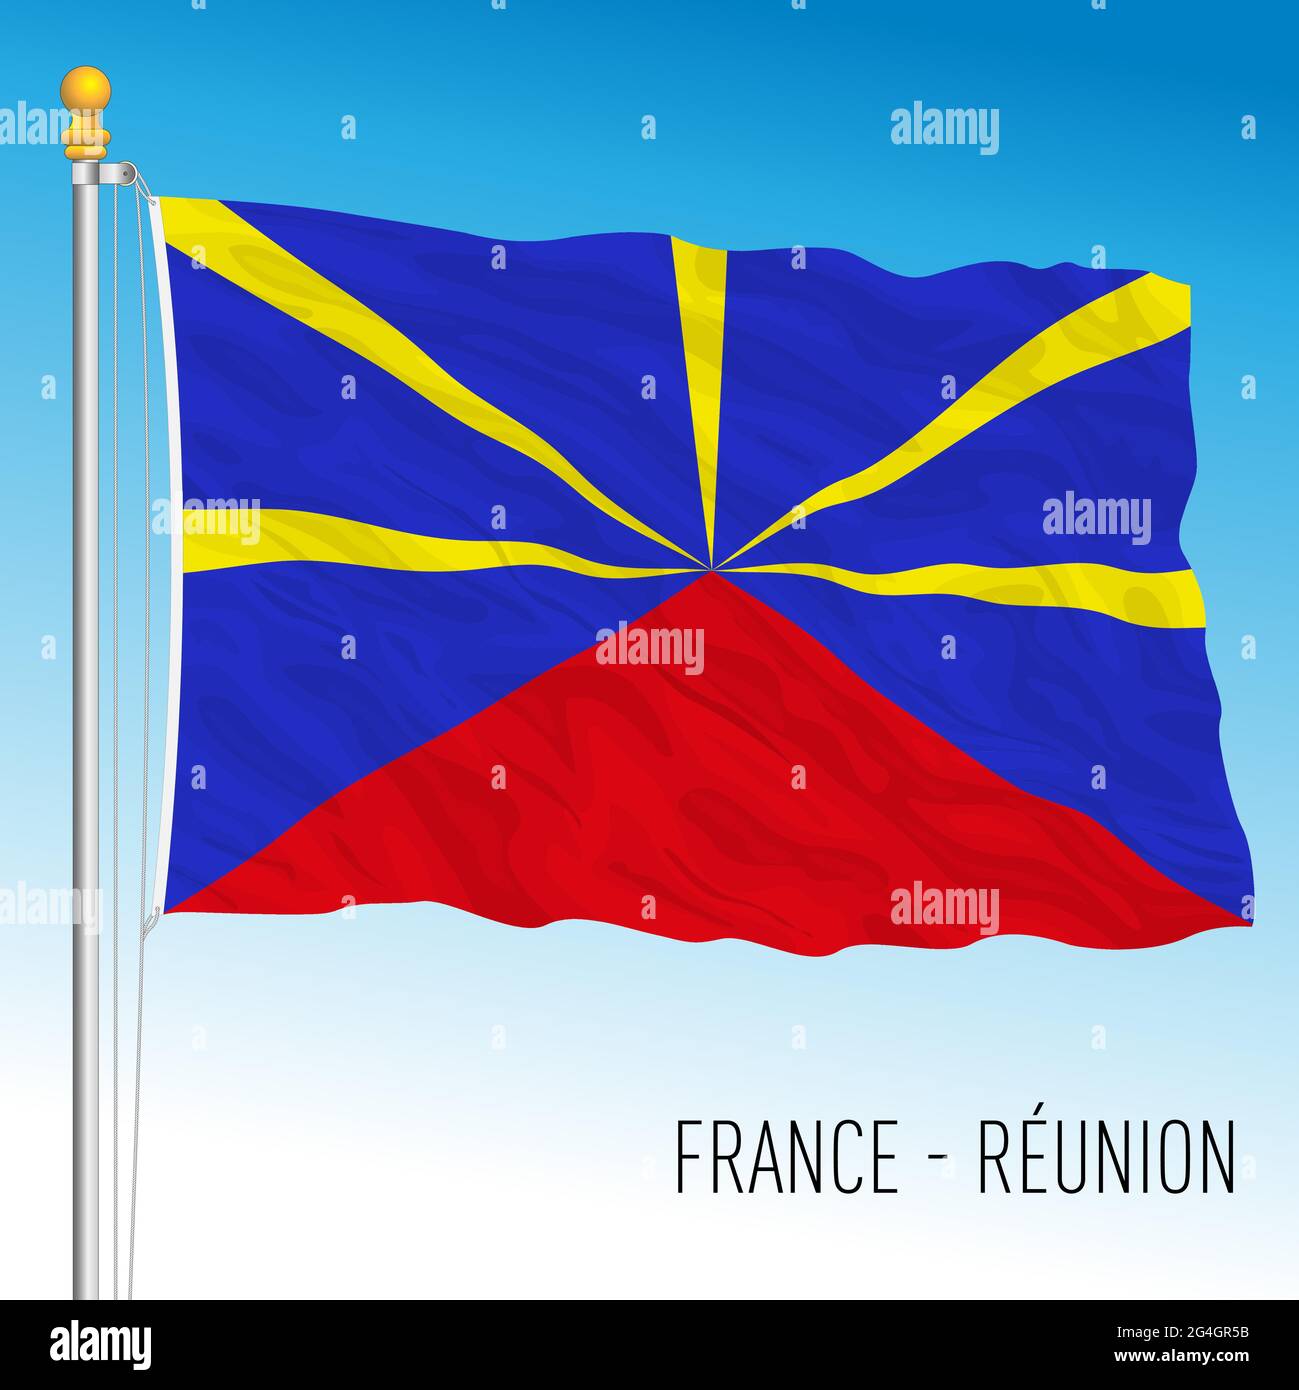 Reunion island flag, France, african overseas territory, vector illustration Stock Vector